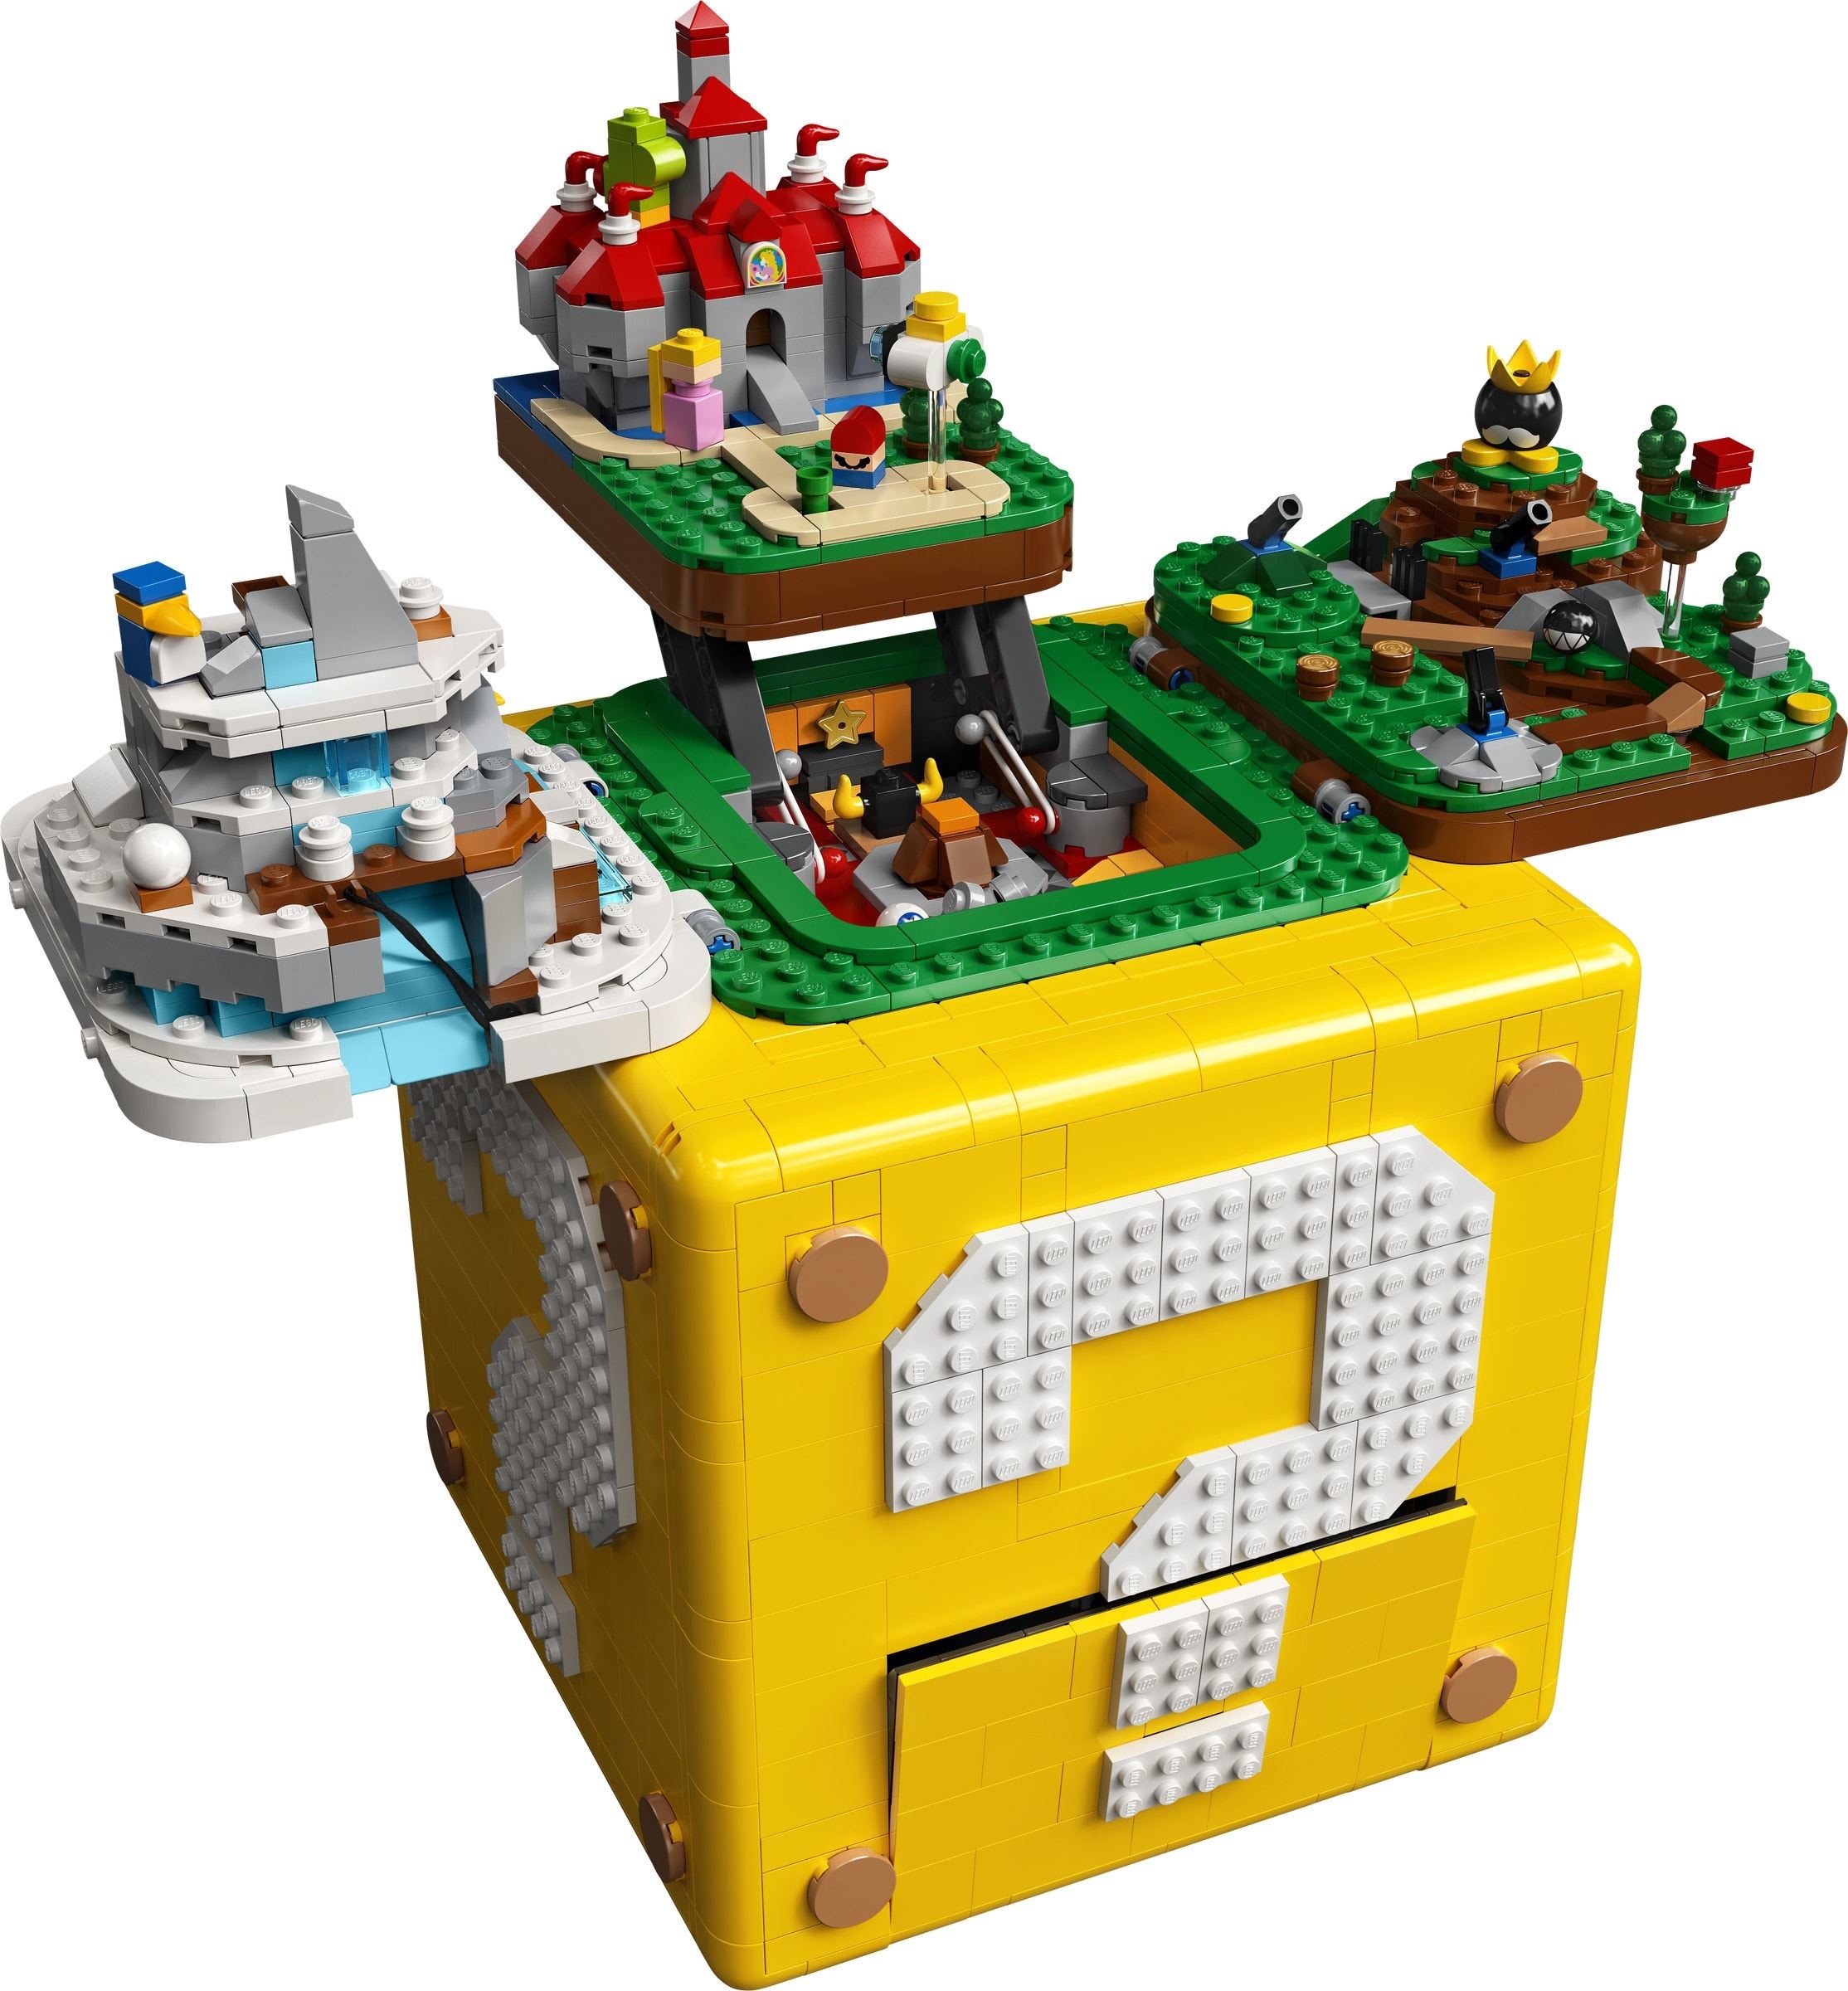 LEGO 71395 Super Mario 64 Question Mark Block (Блок «Знак вопроса» из Super Mario 64)